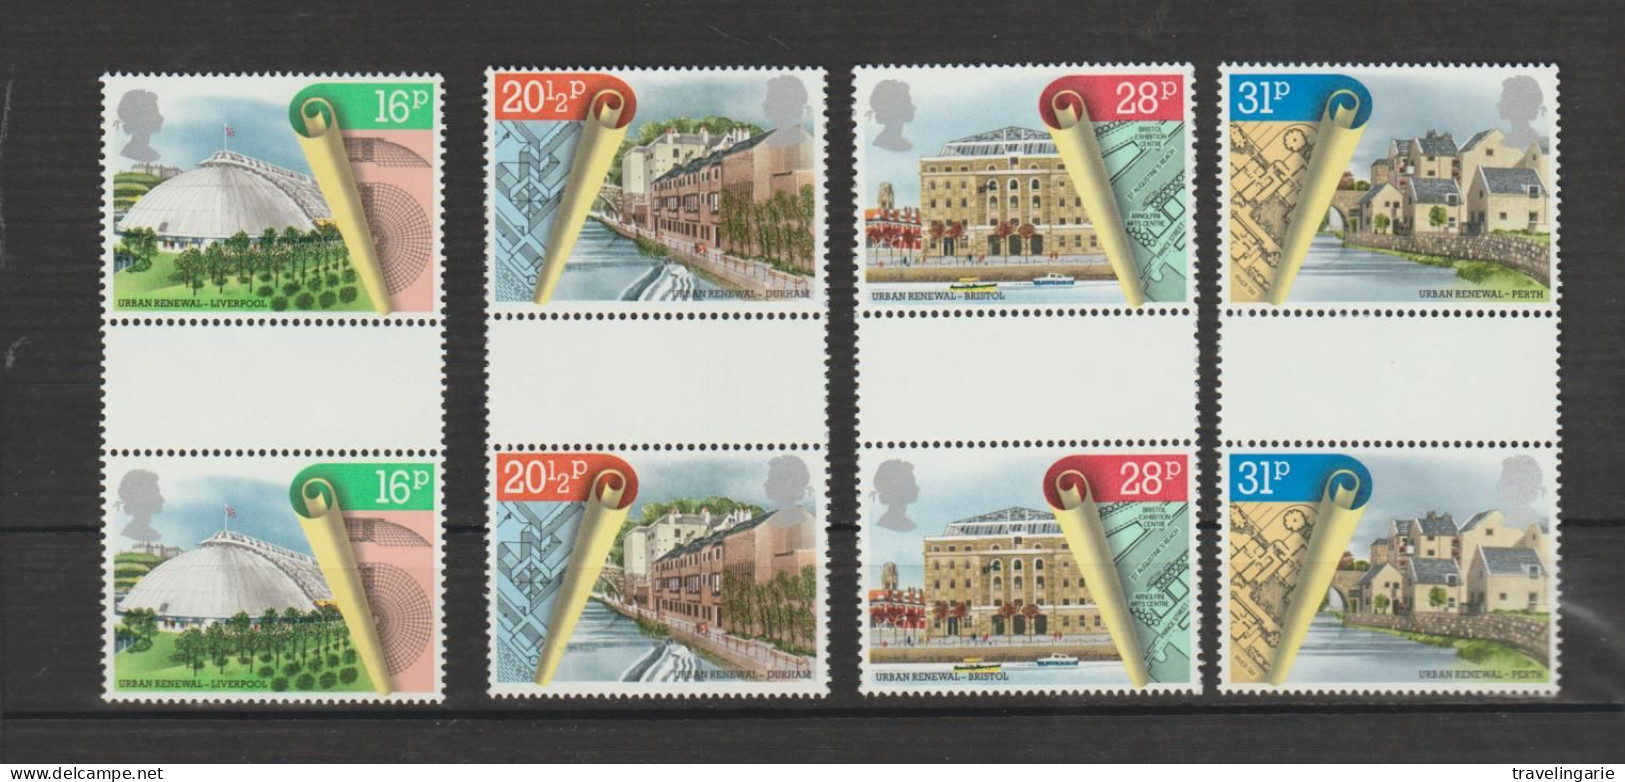 Great Britain 1984 Urban Renewal Gutter Pairs MNH ** - Unused Stamps